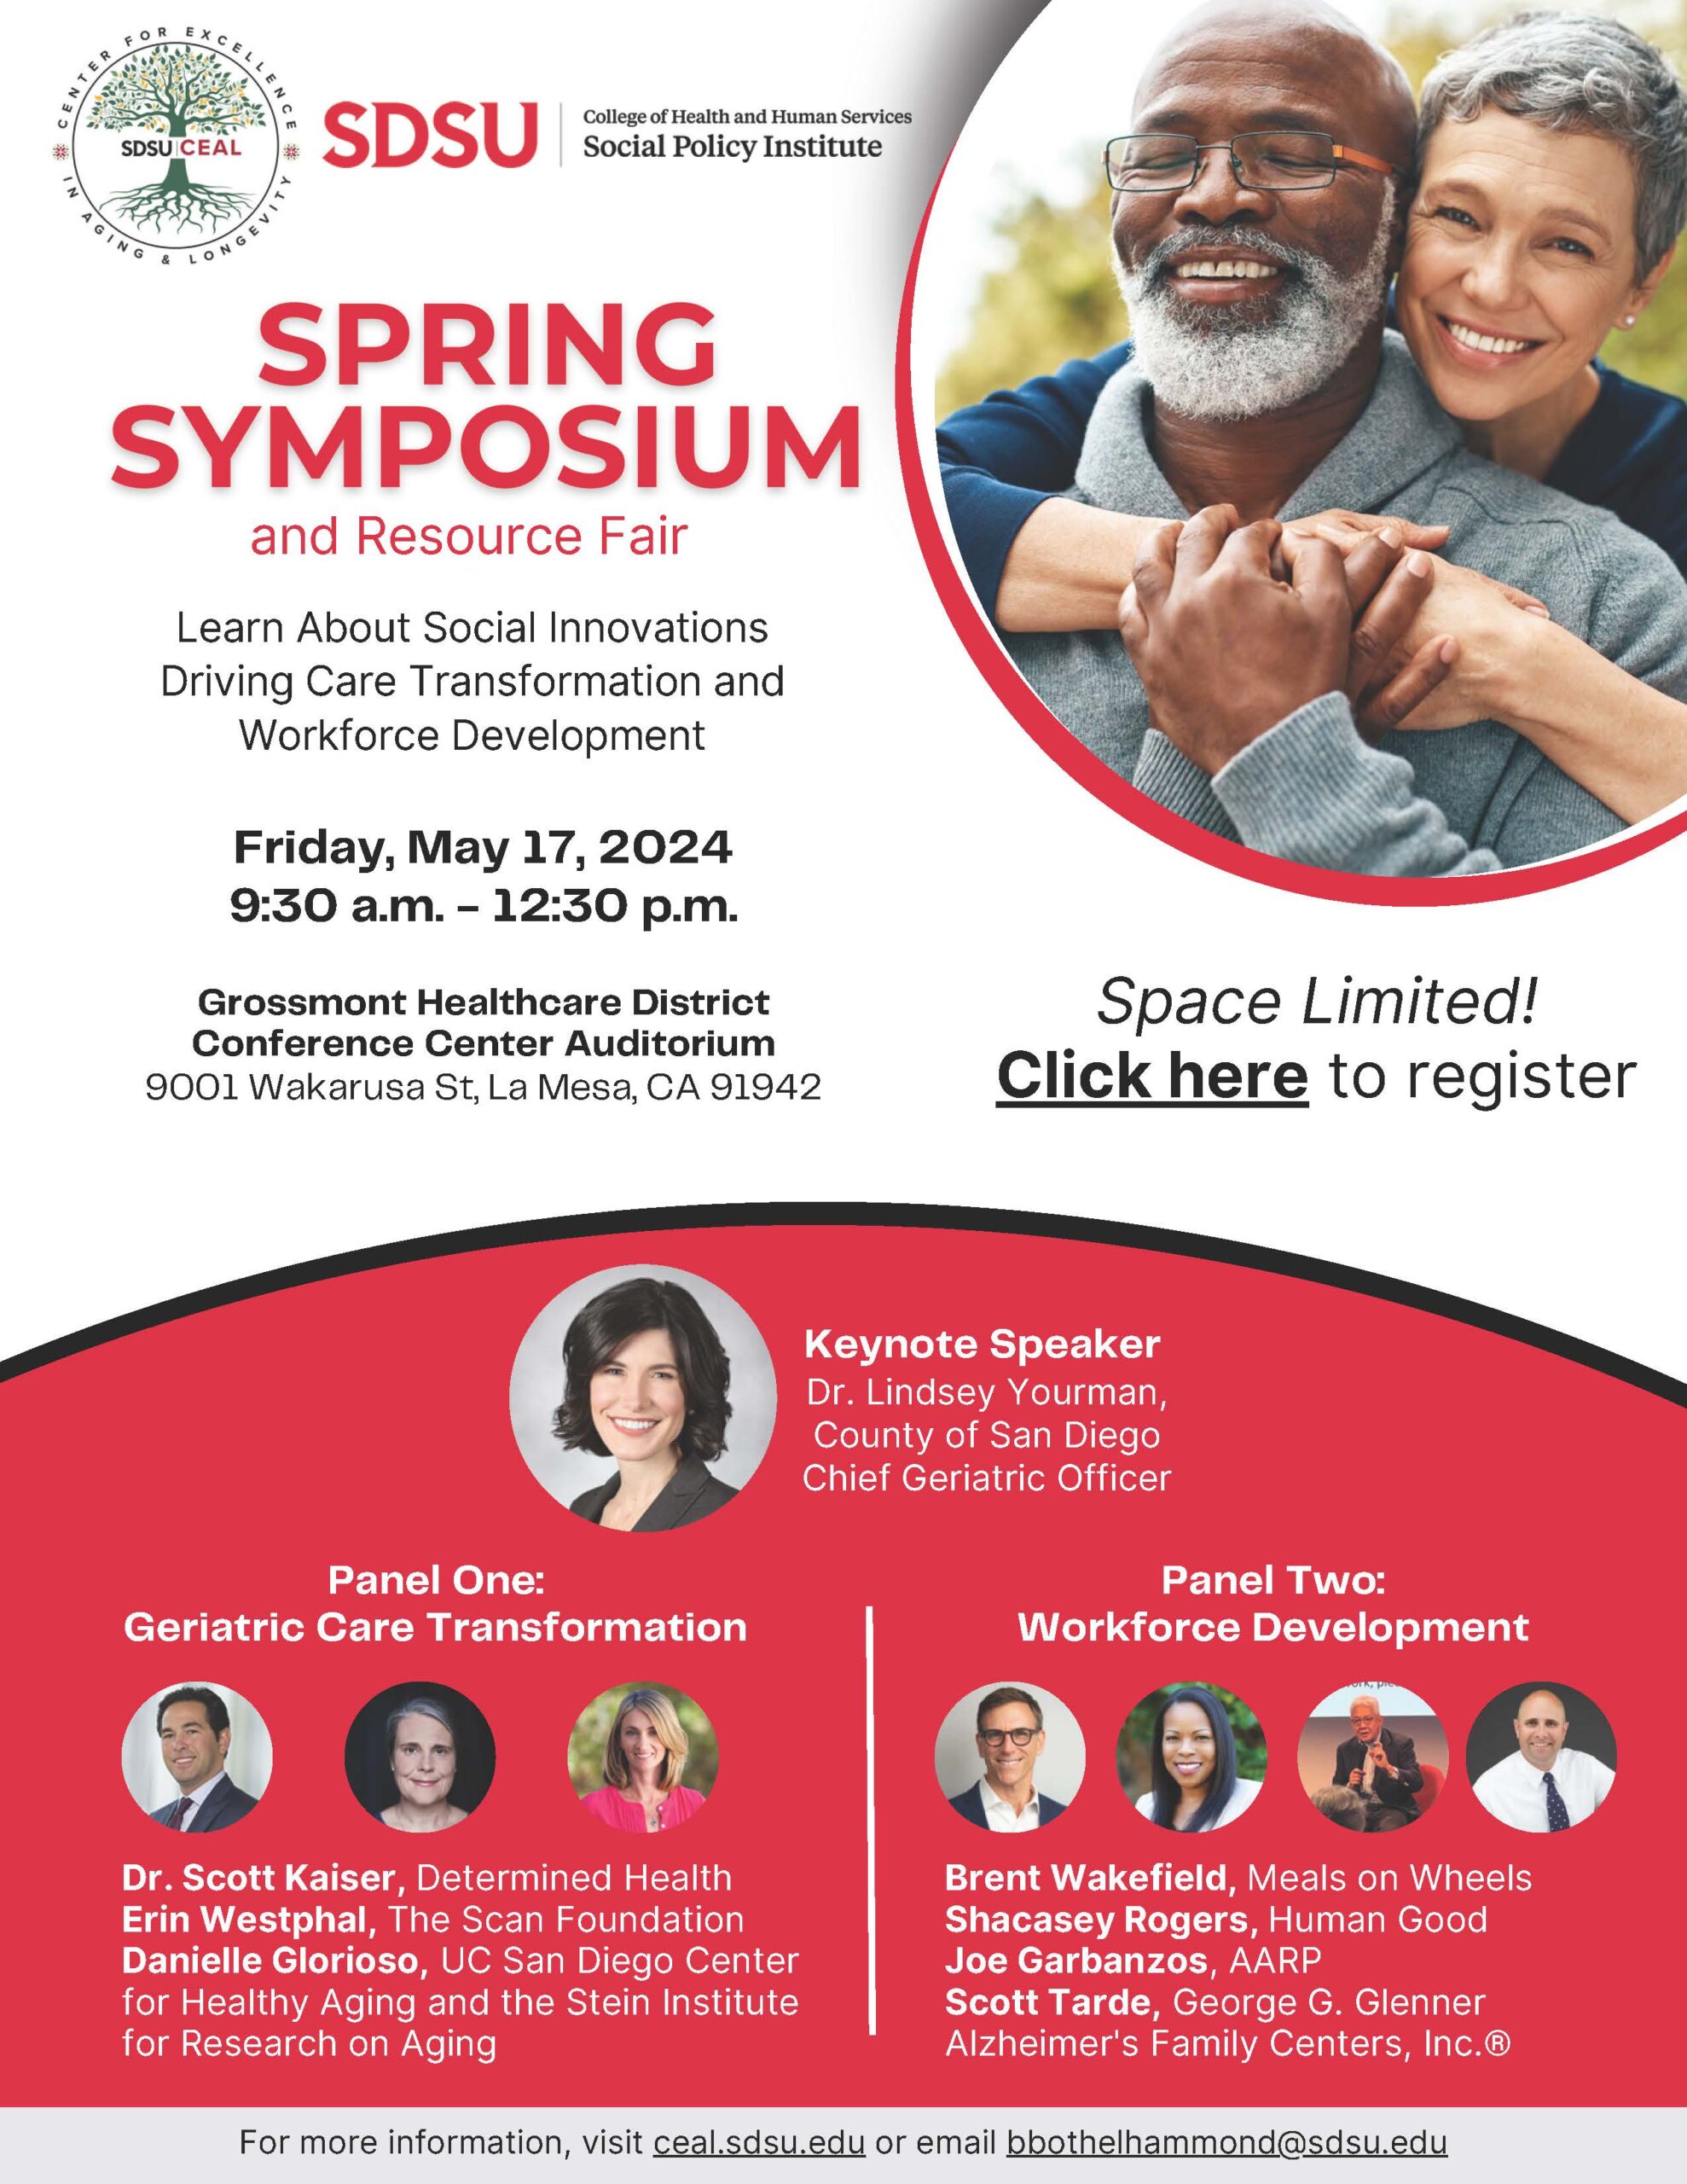 CEAL Spring Symposium Flyer